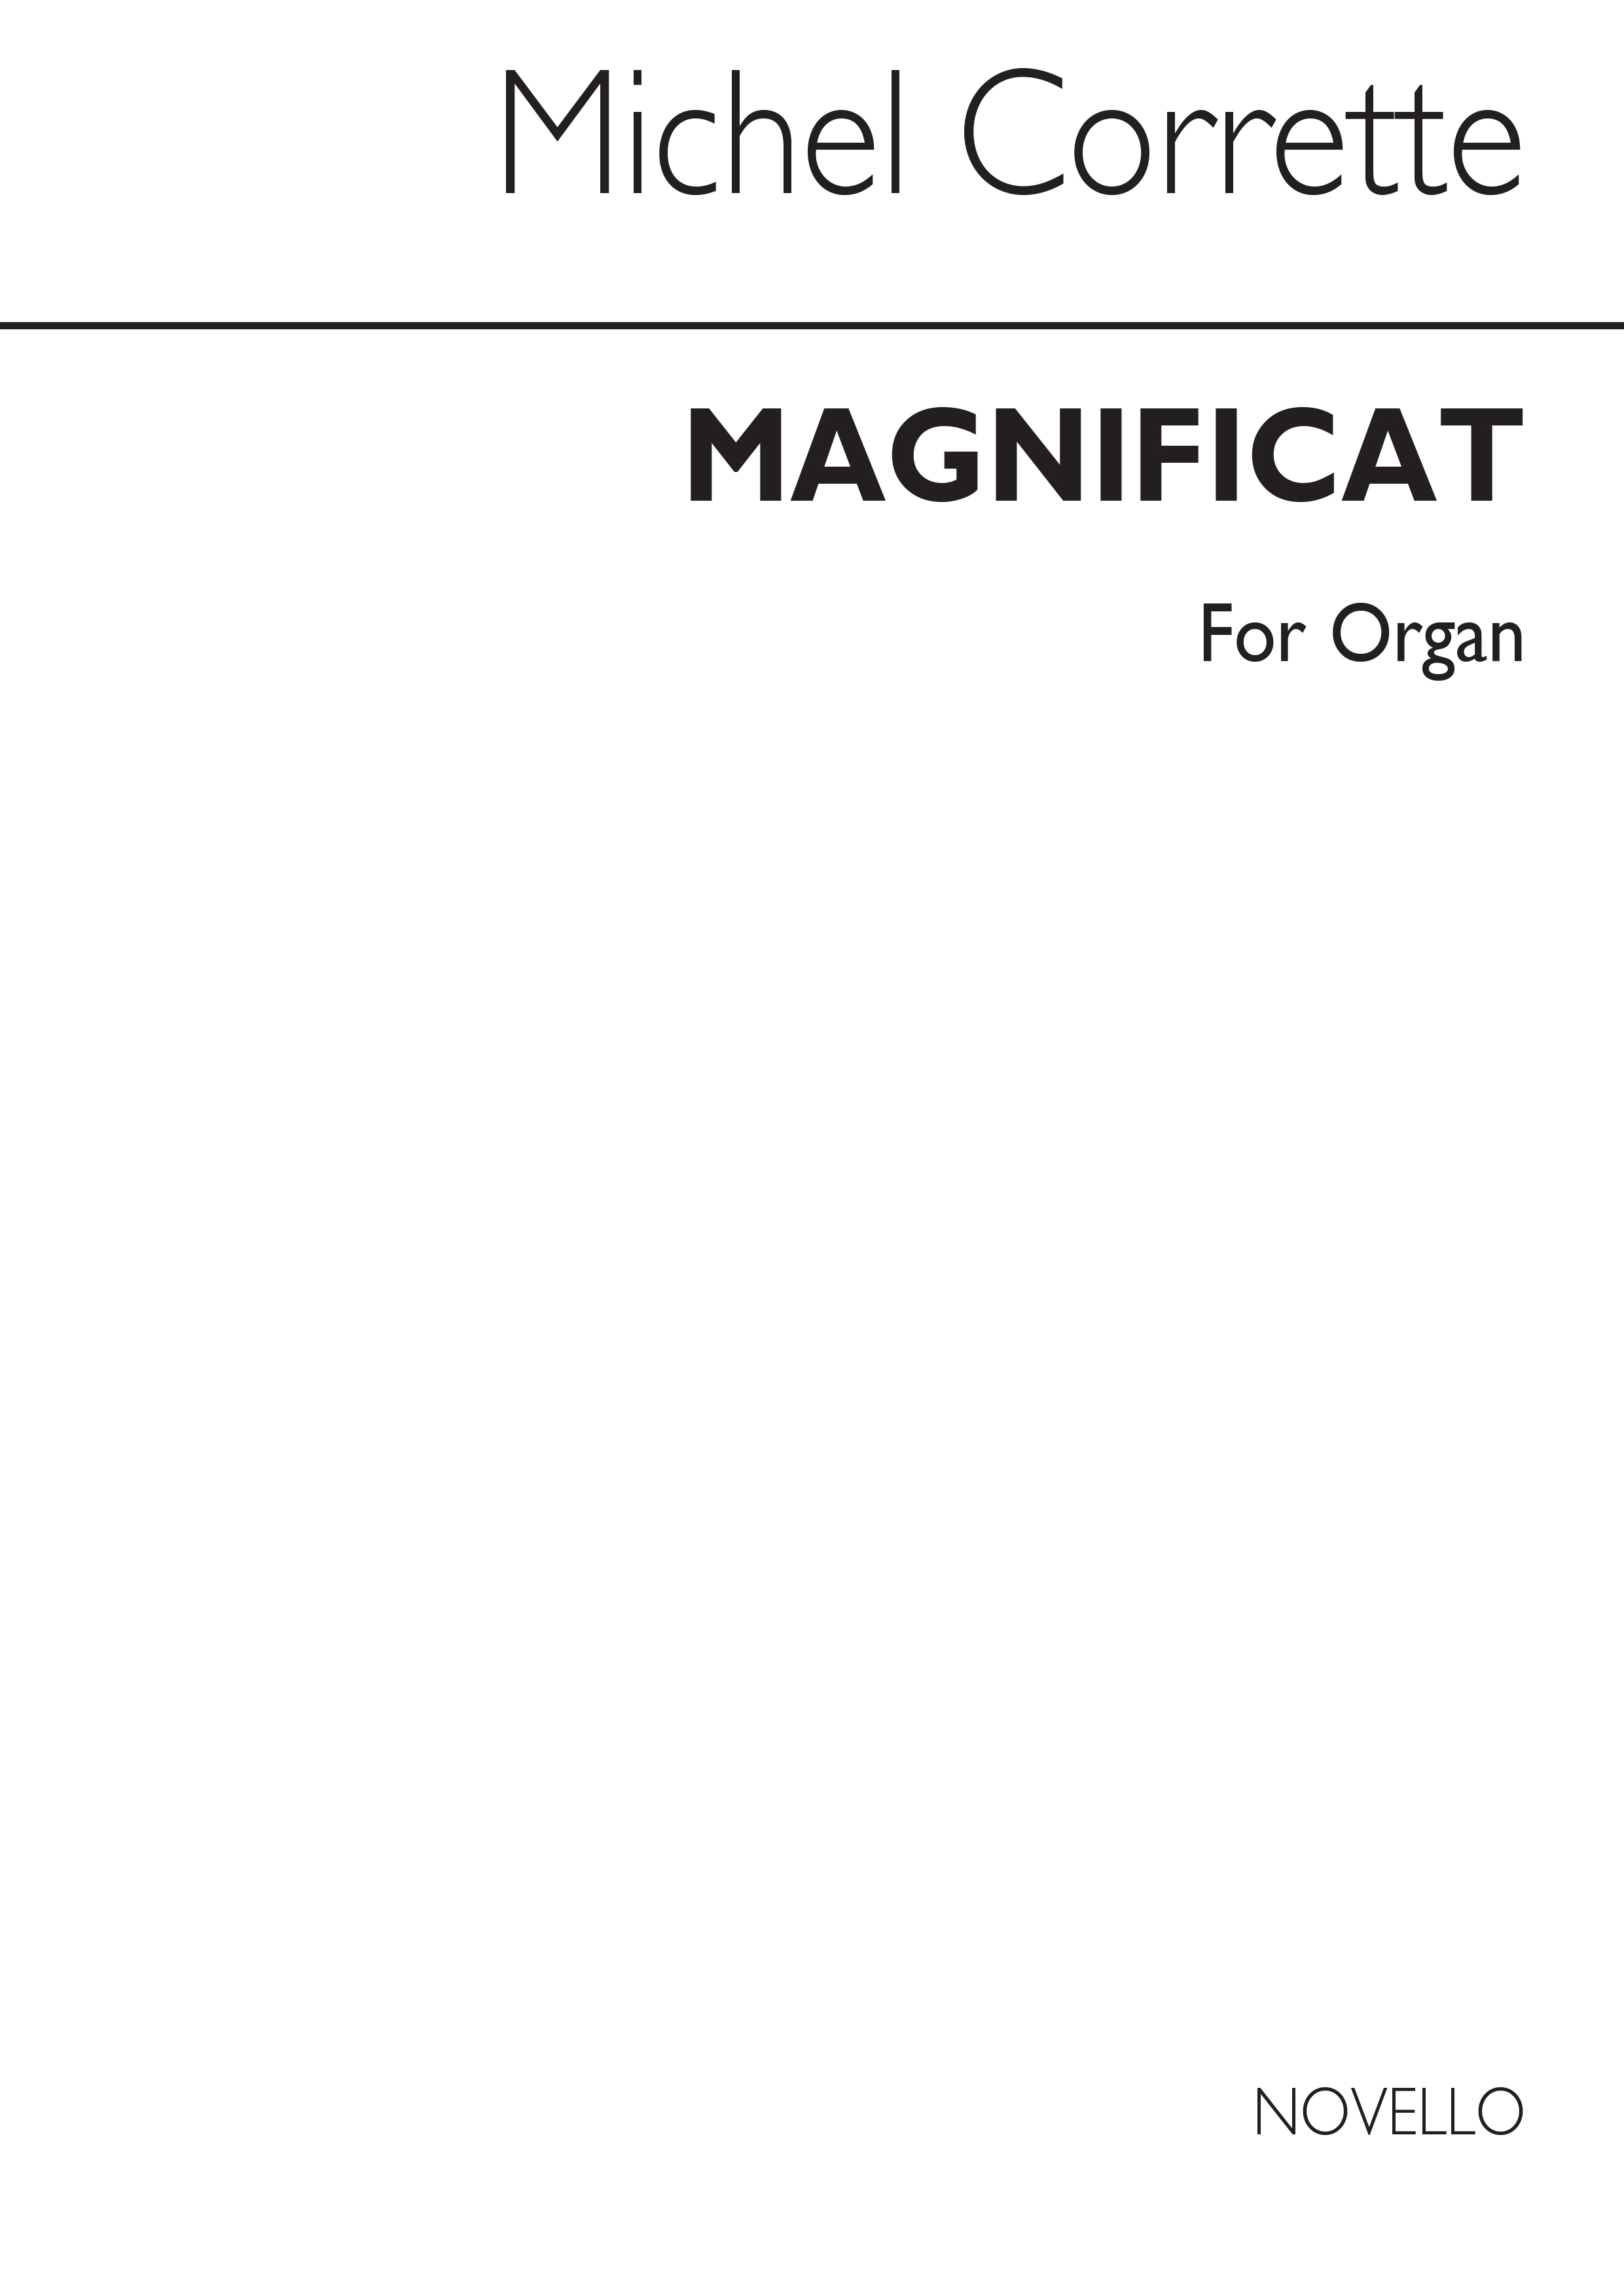 Corrette: Magnificat Du 3e Et 4e Ton for Solo Organ